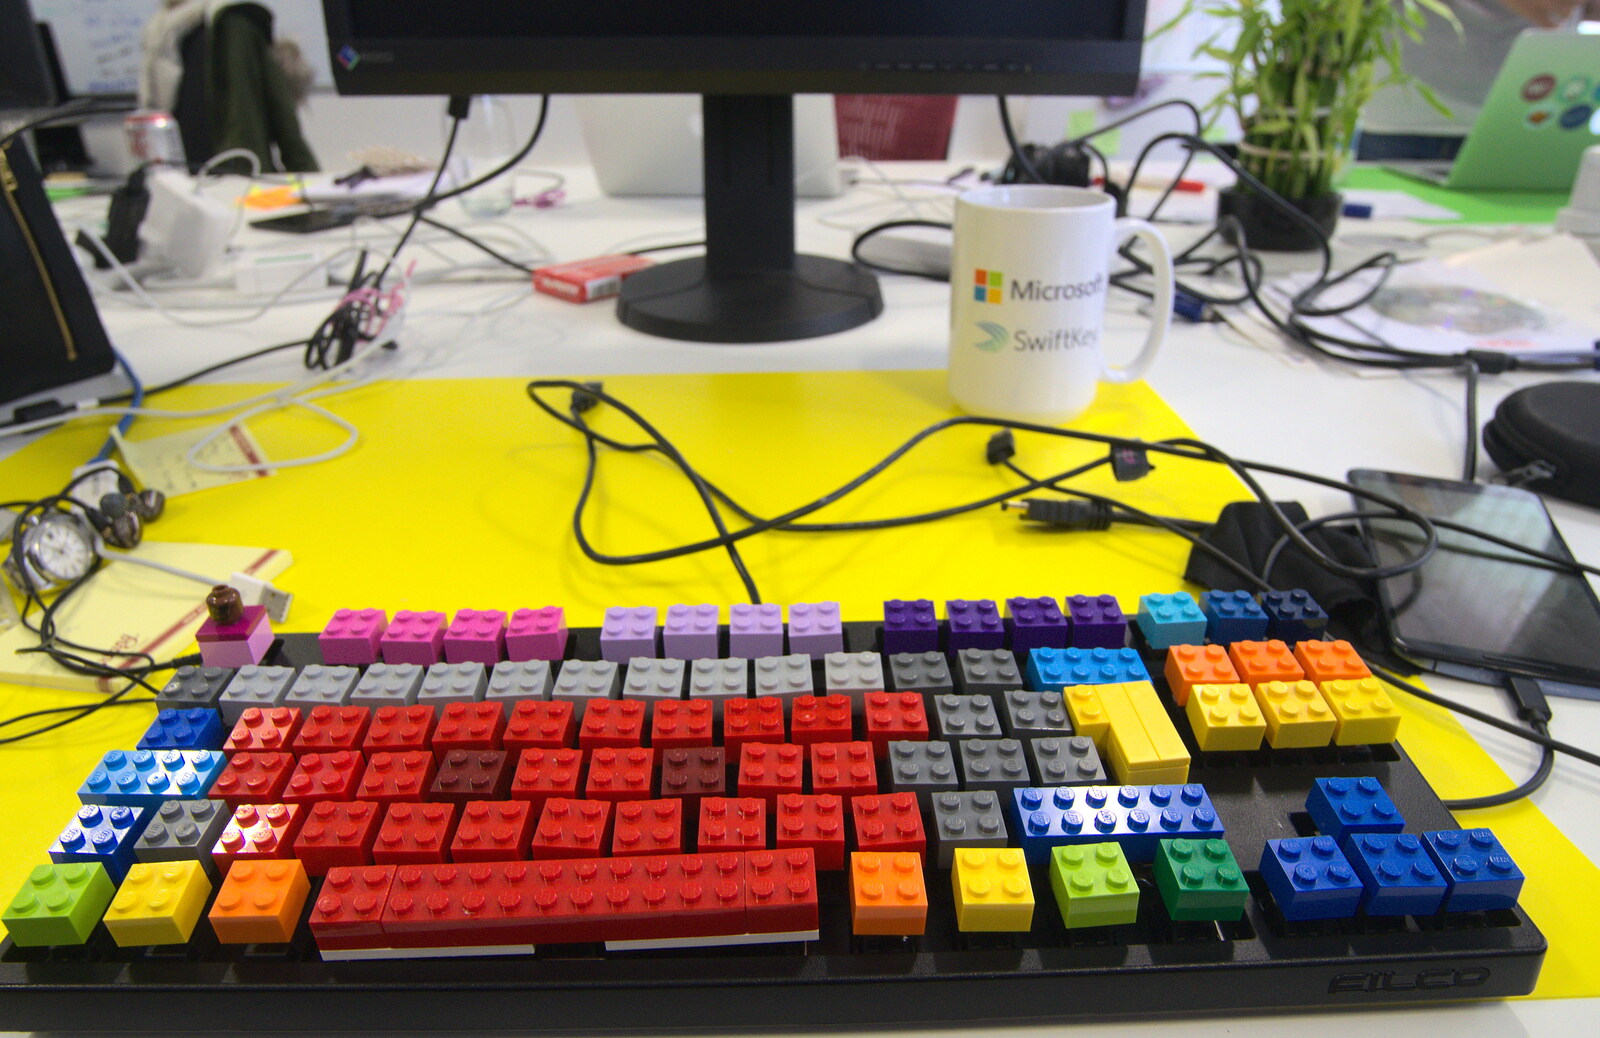 Zoheb's keyboard is finished from A SwiftKey Innovation Week, Southwark, London - 22nd April 2016